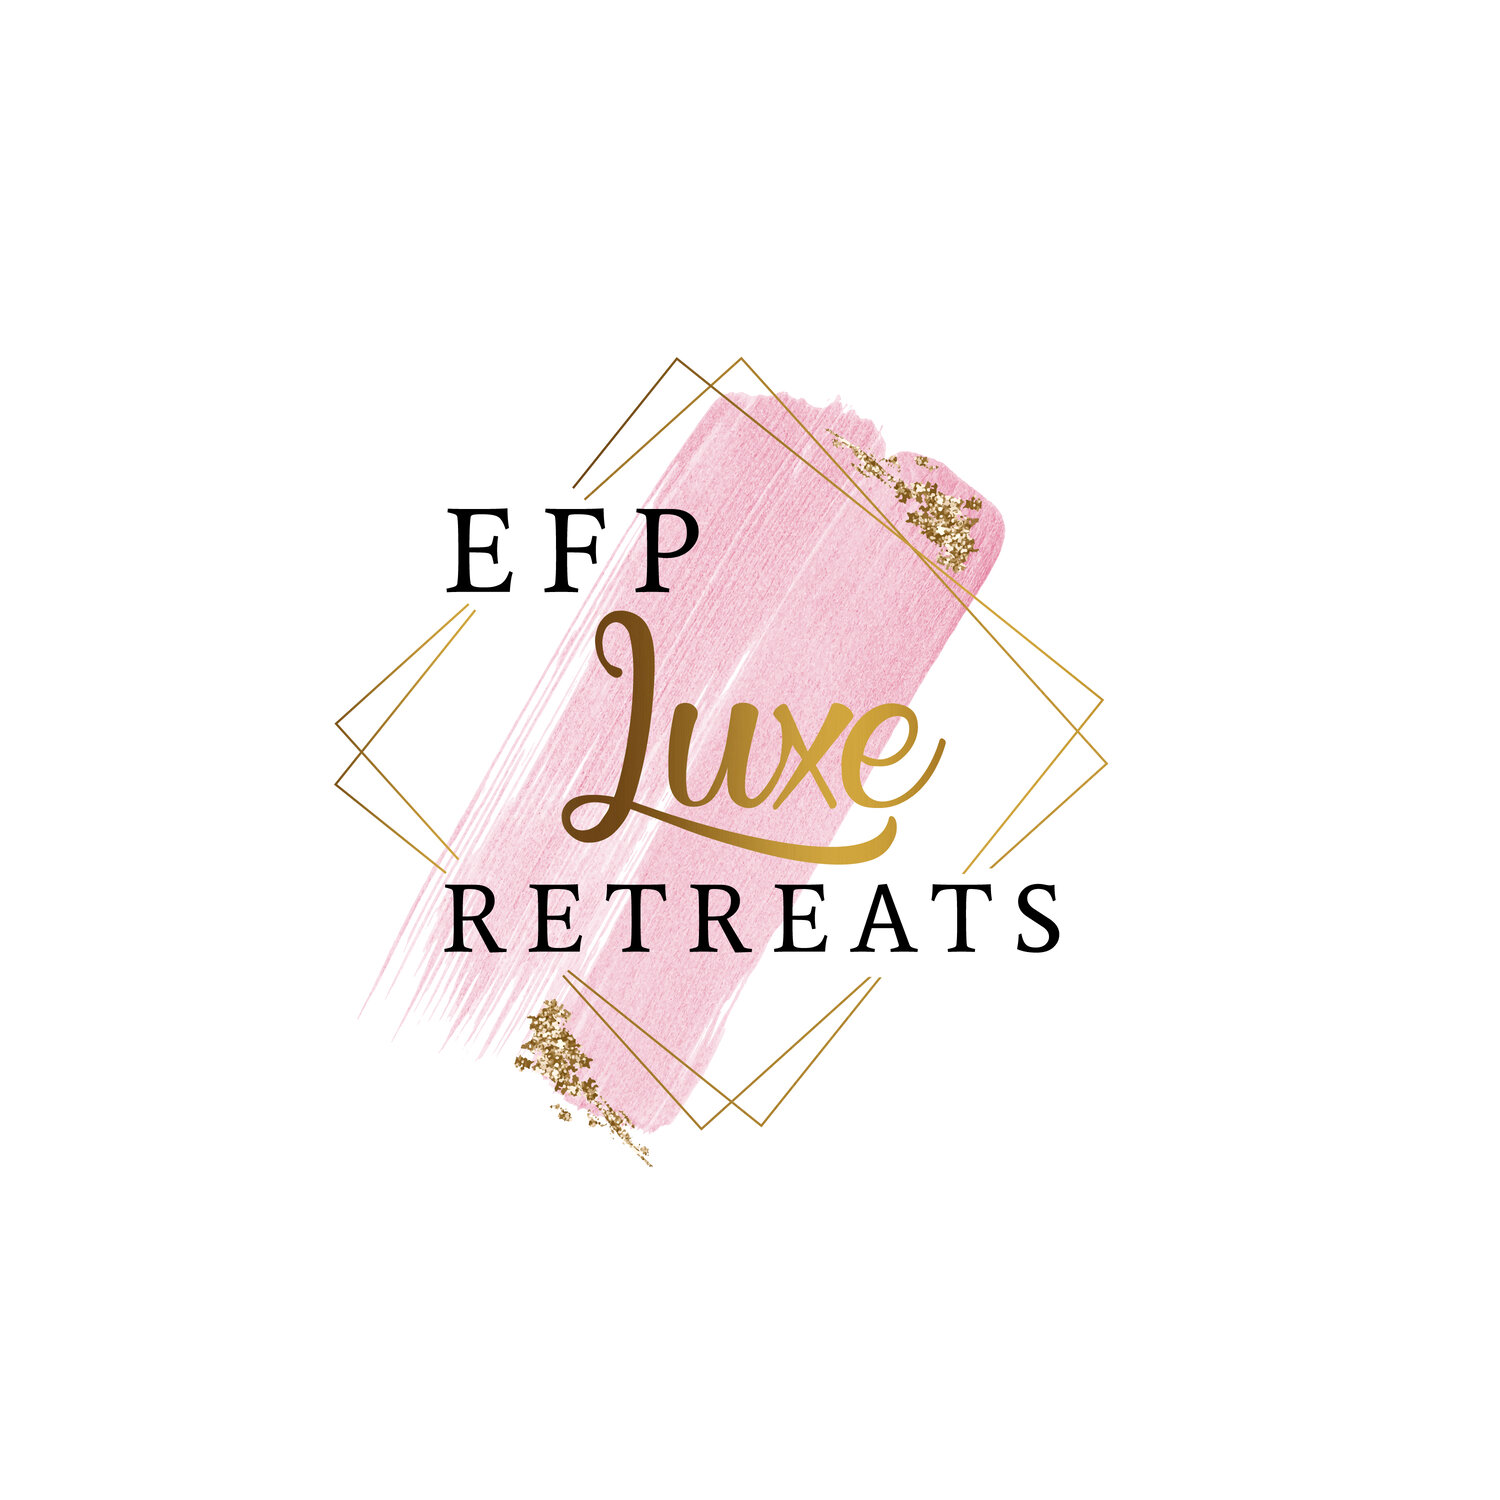 EFP Luxe Retreats